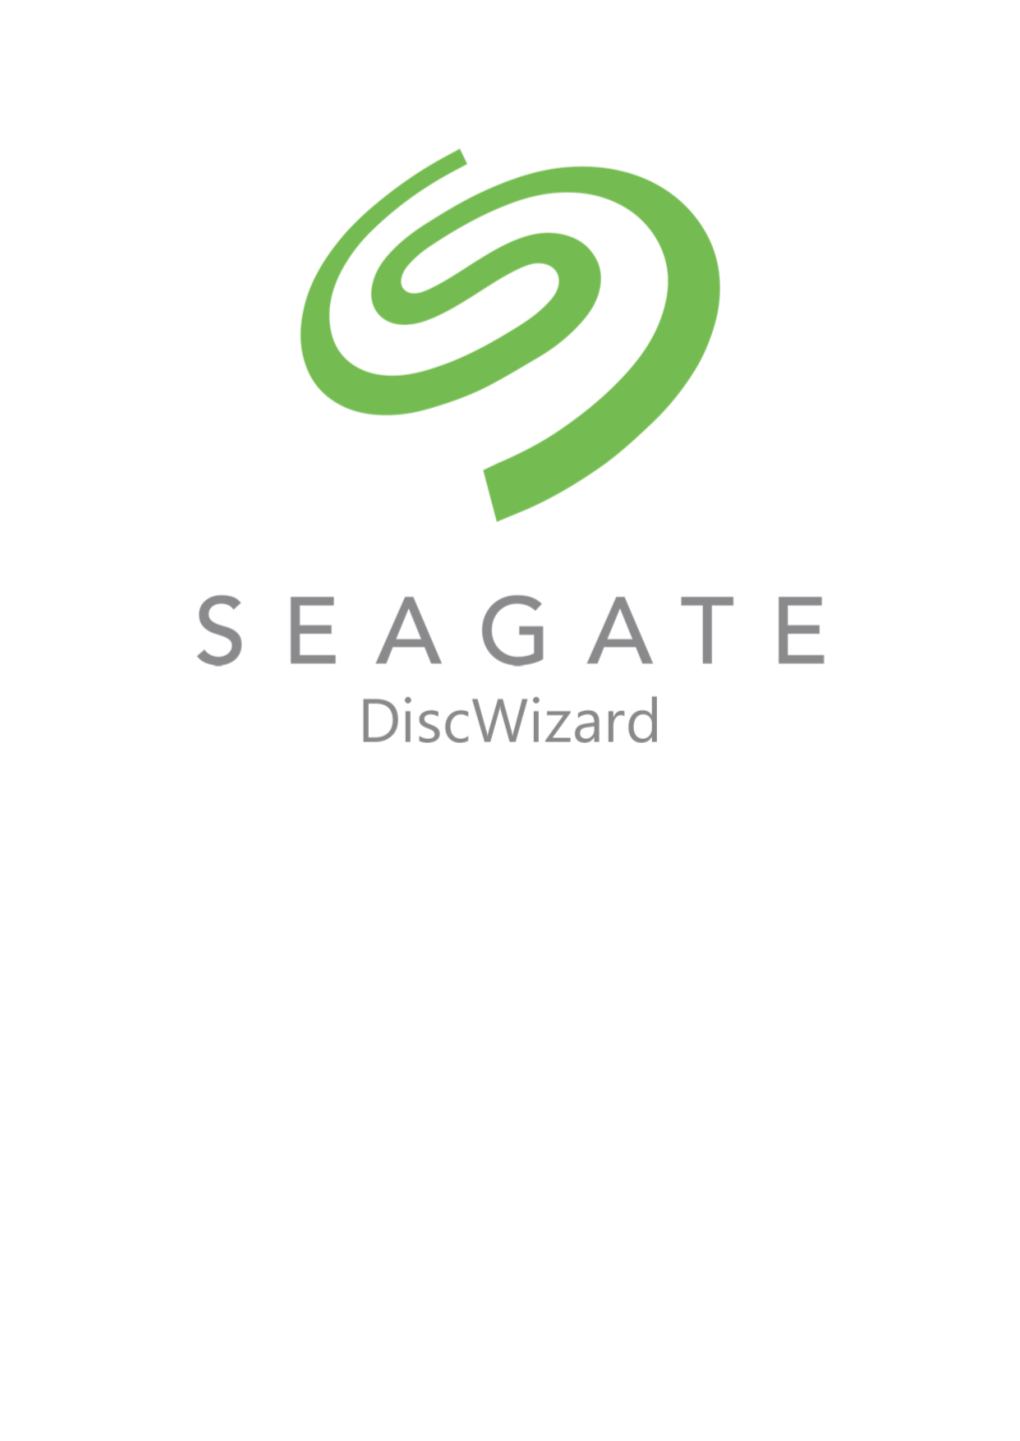 Seagate Discwizard?